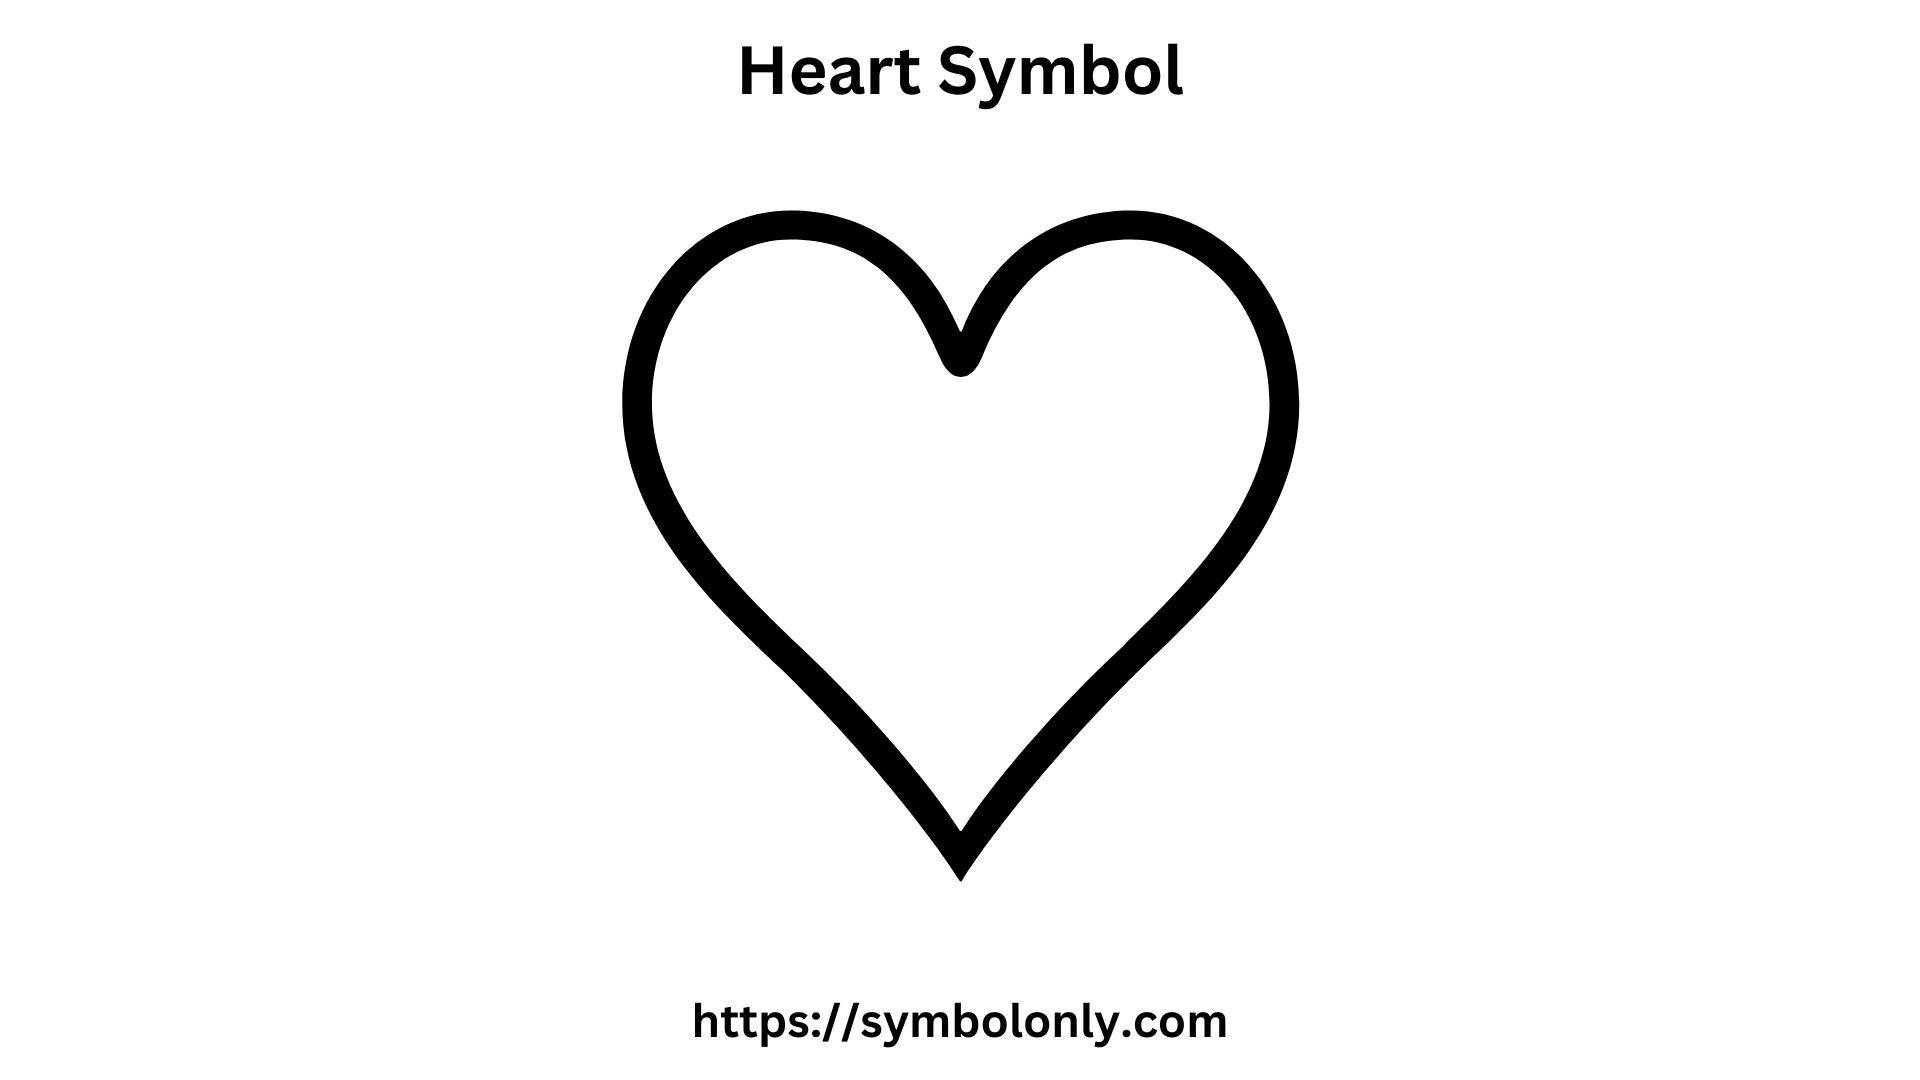 black heart symbol copy and paste